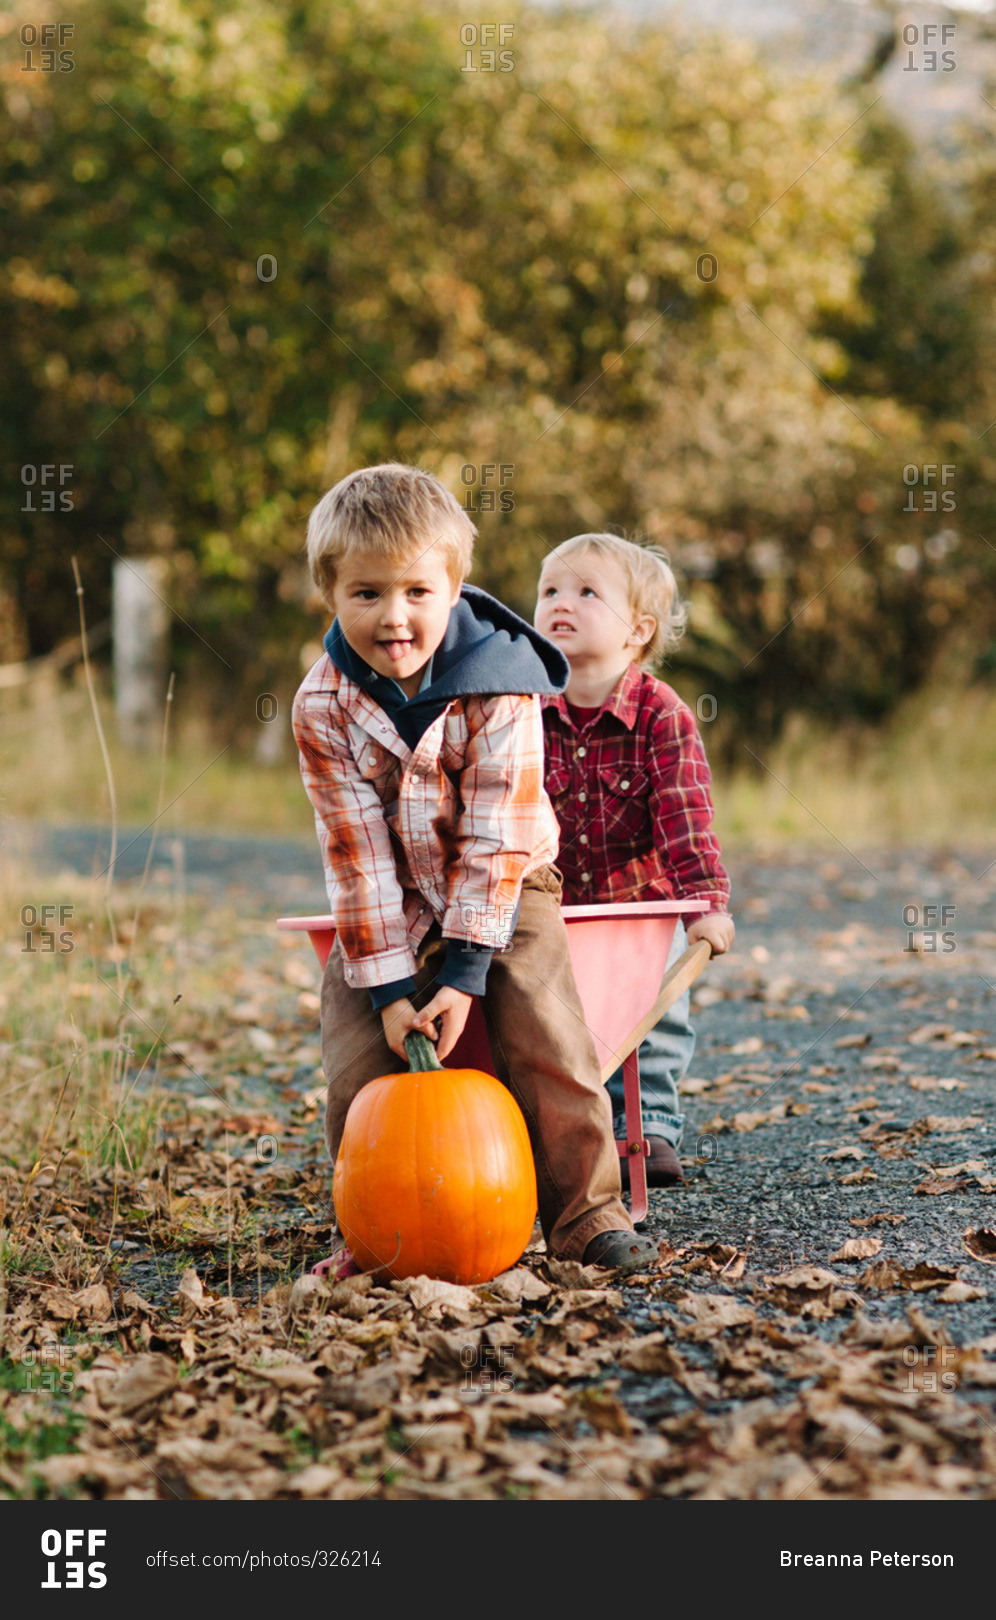 Two toddler boys with pumpkin and wheelbarrow